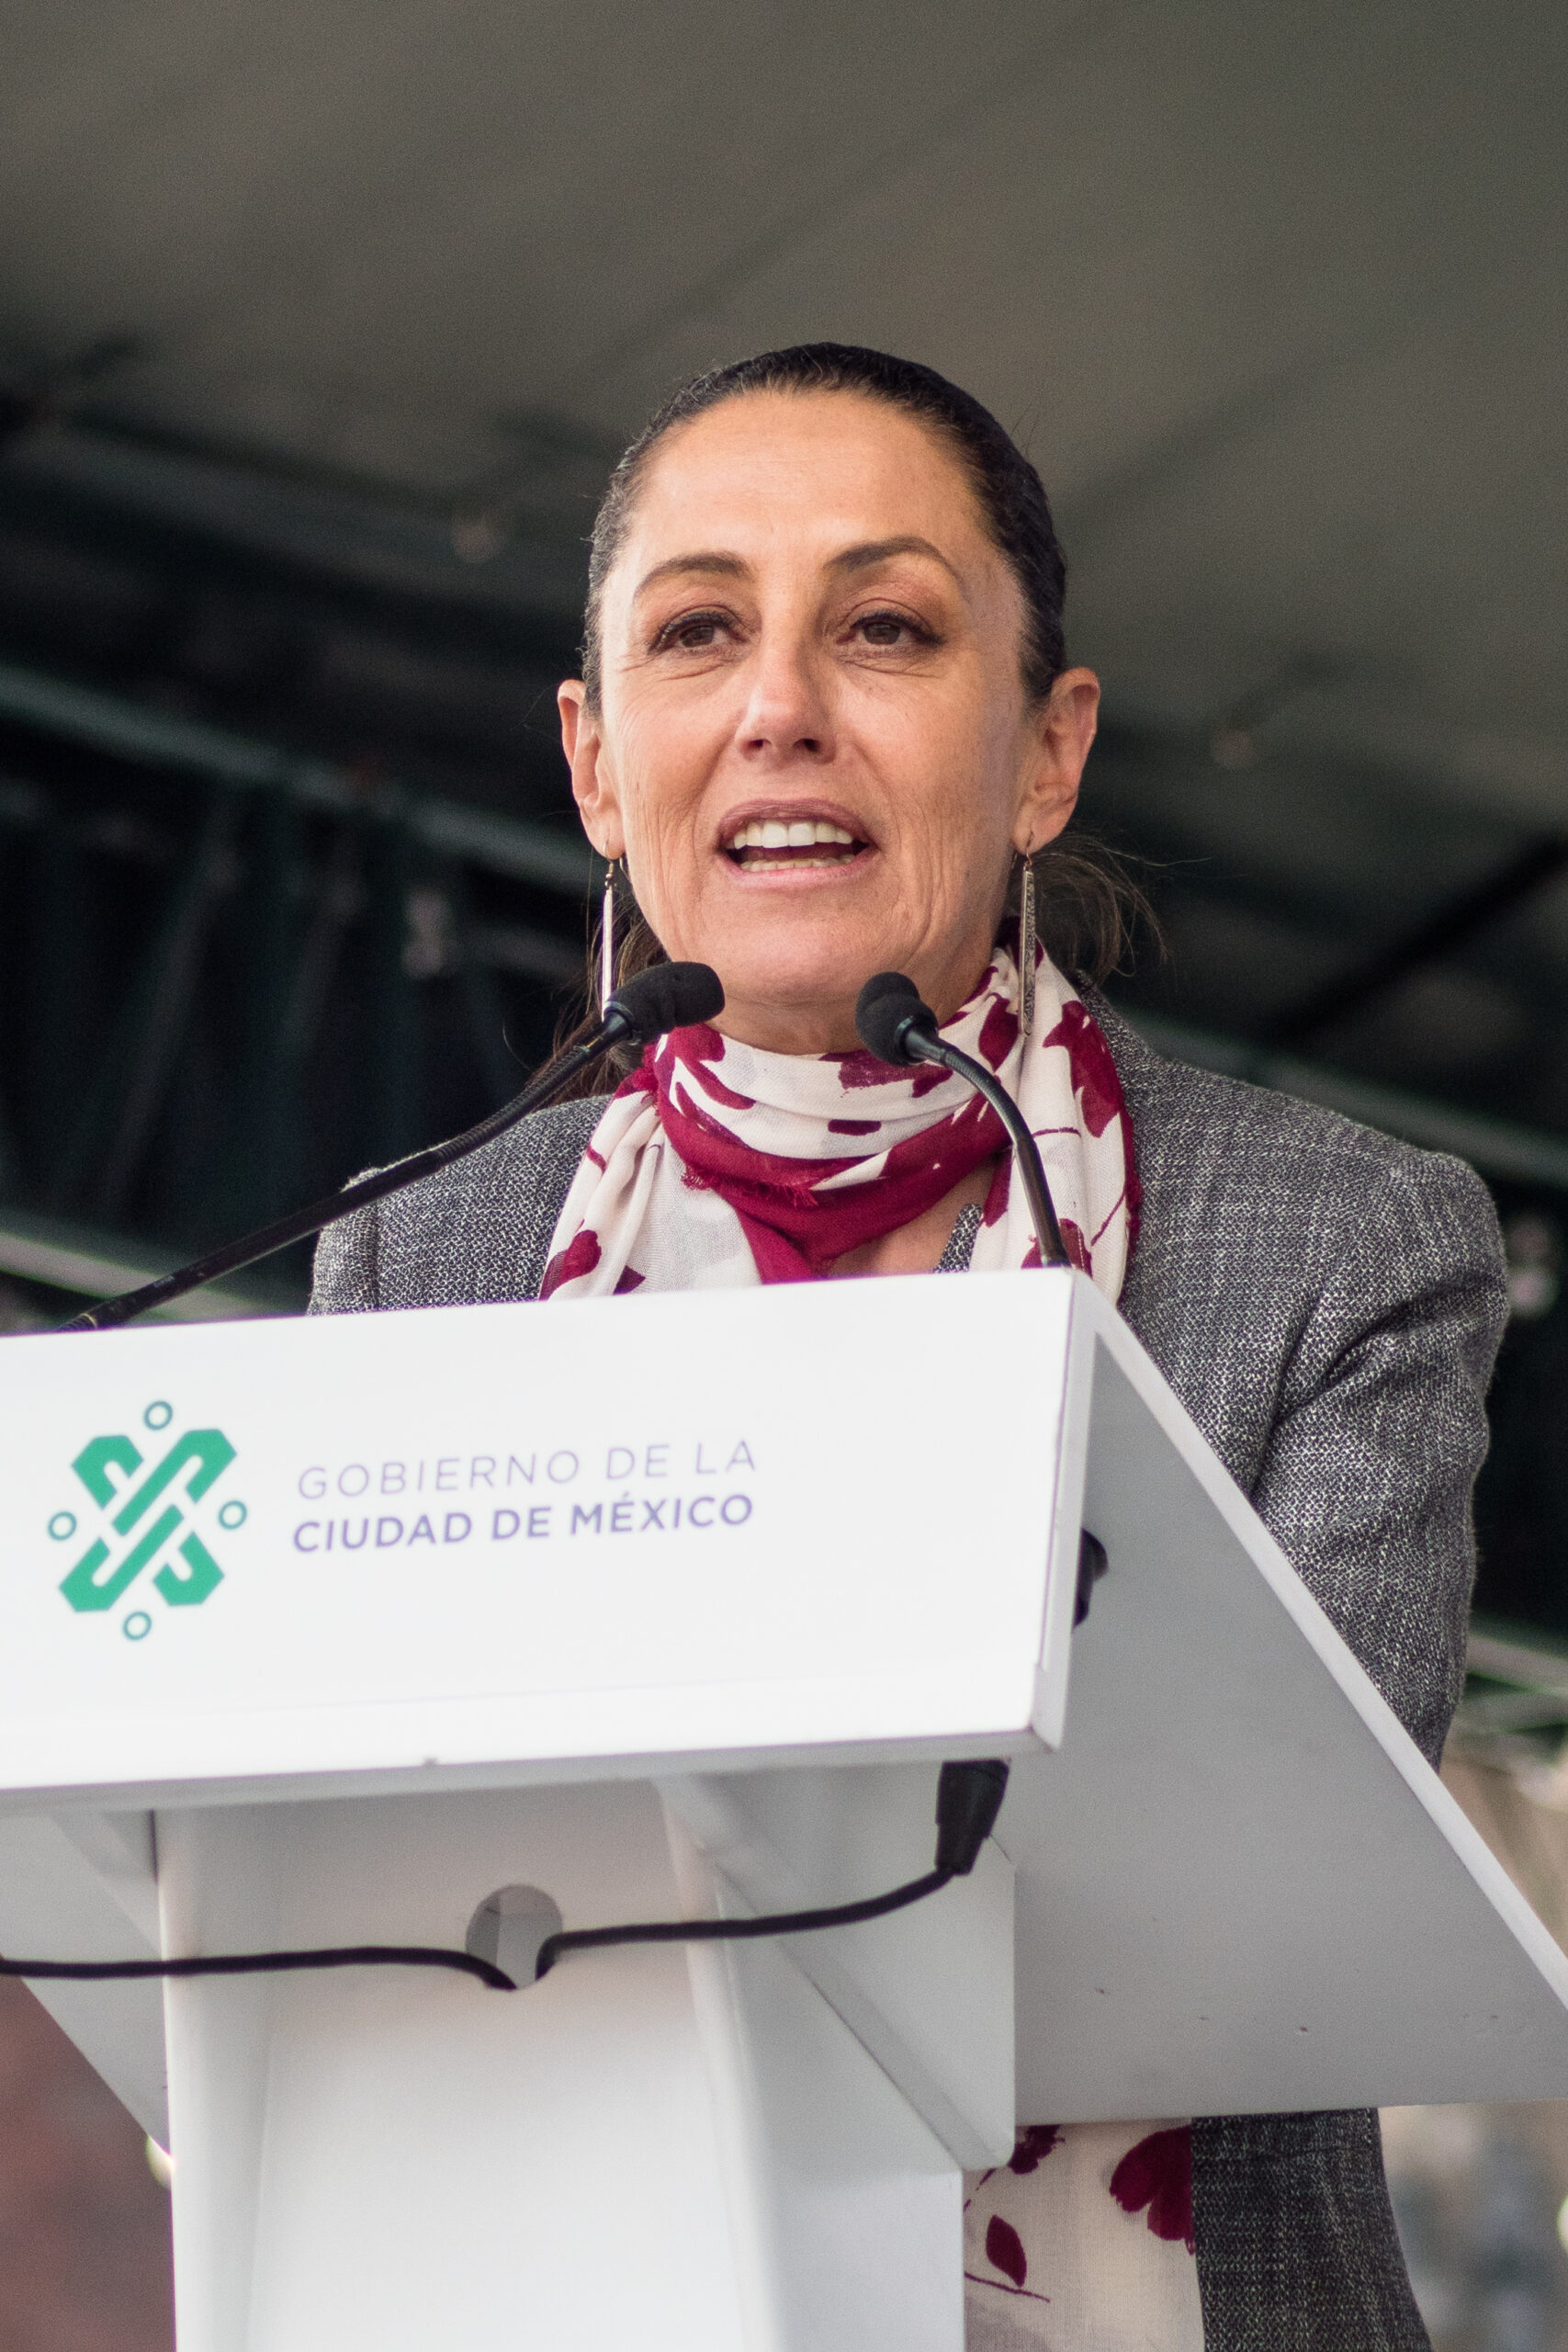 Claudia Sheinbaum speaking during her tenure as Mexico's City mayor in 2020